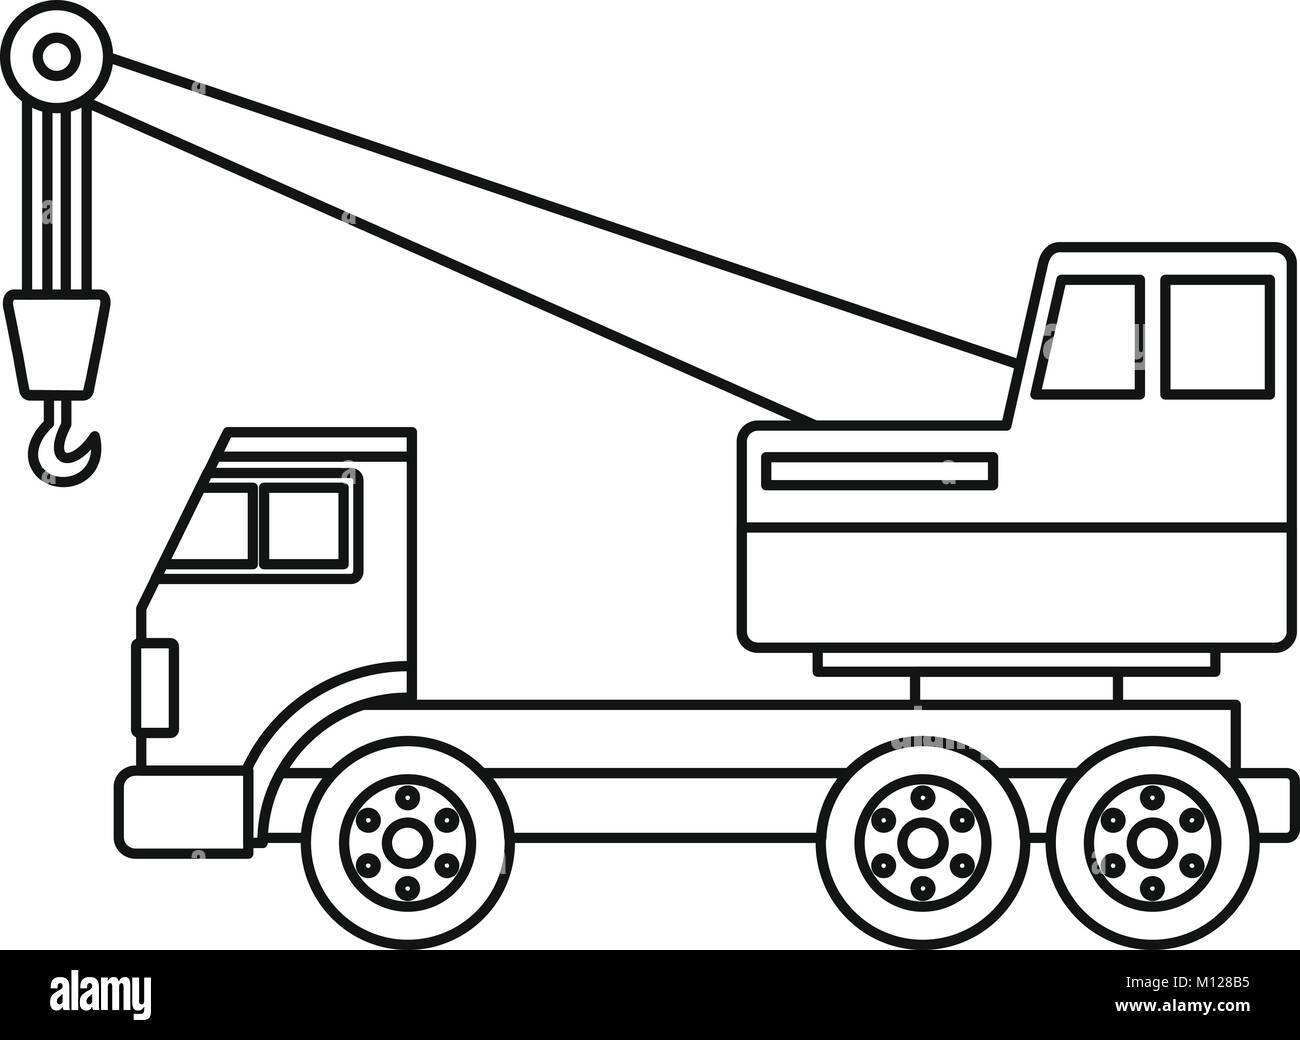 Truck crane icon outline Stock Vector